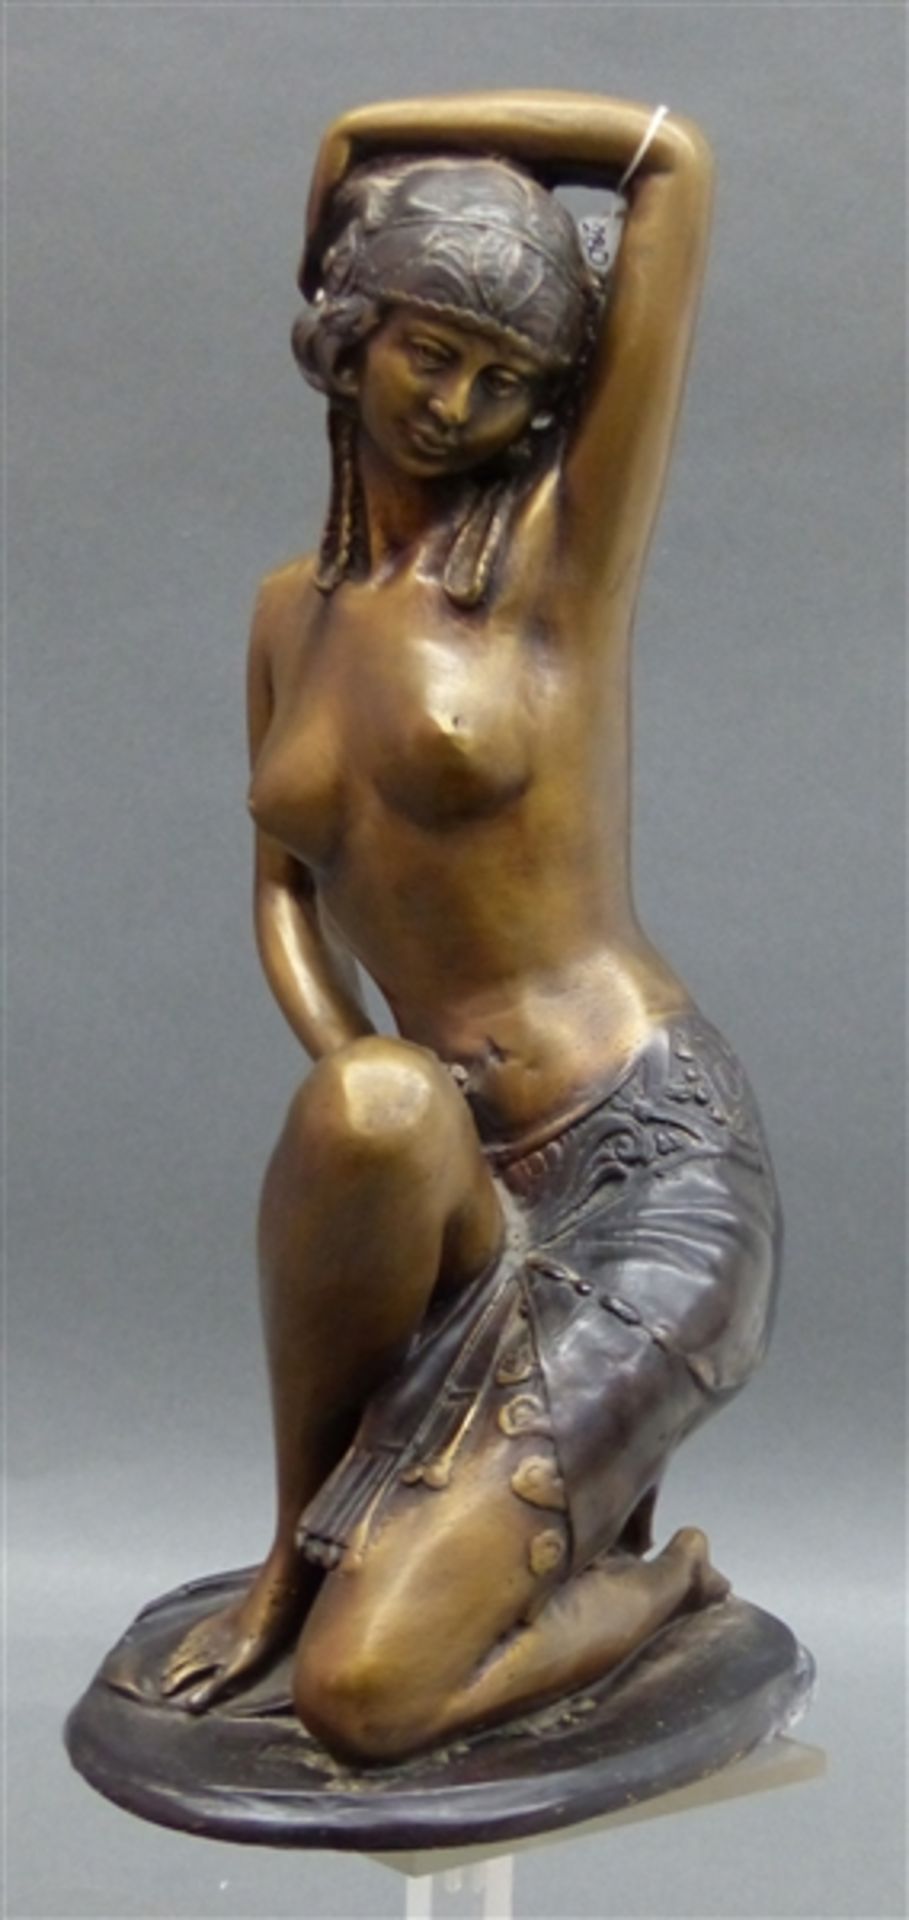 Bronzeskulptur knieender Akt, 20. Jh., braune Patina, h 32 cm,